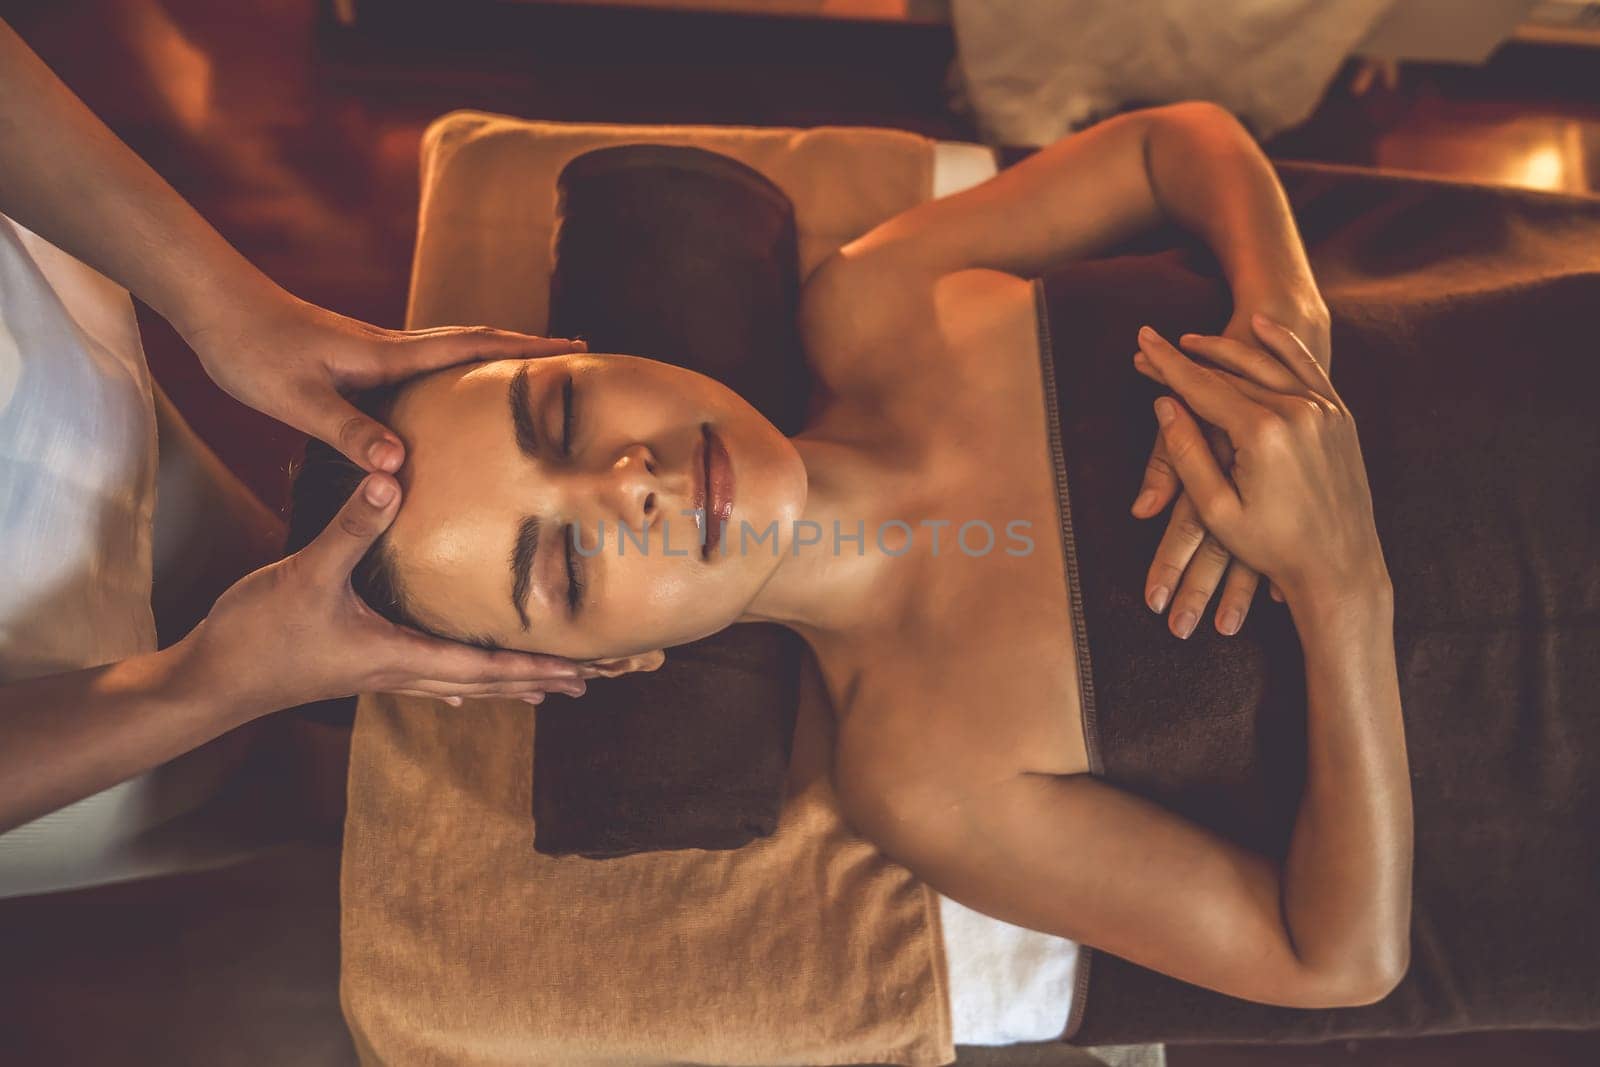 Caucasian woman enjoying relaxing anti-stress head massage. Quiescent by biancoblue